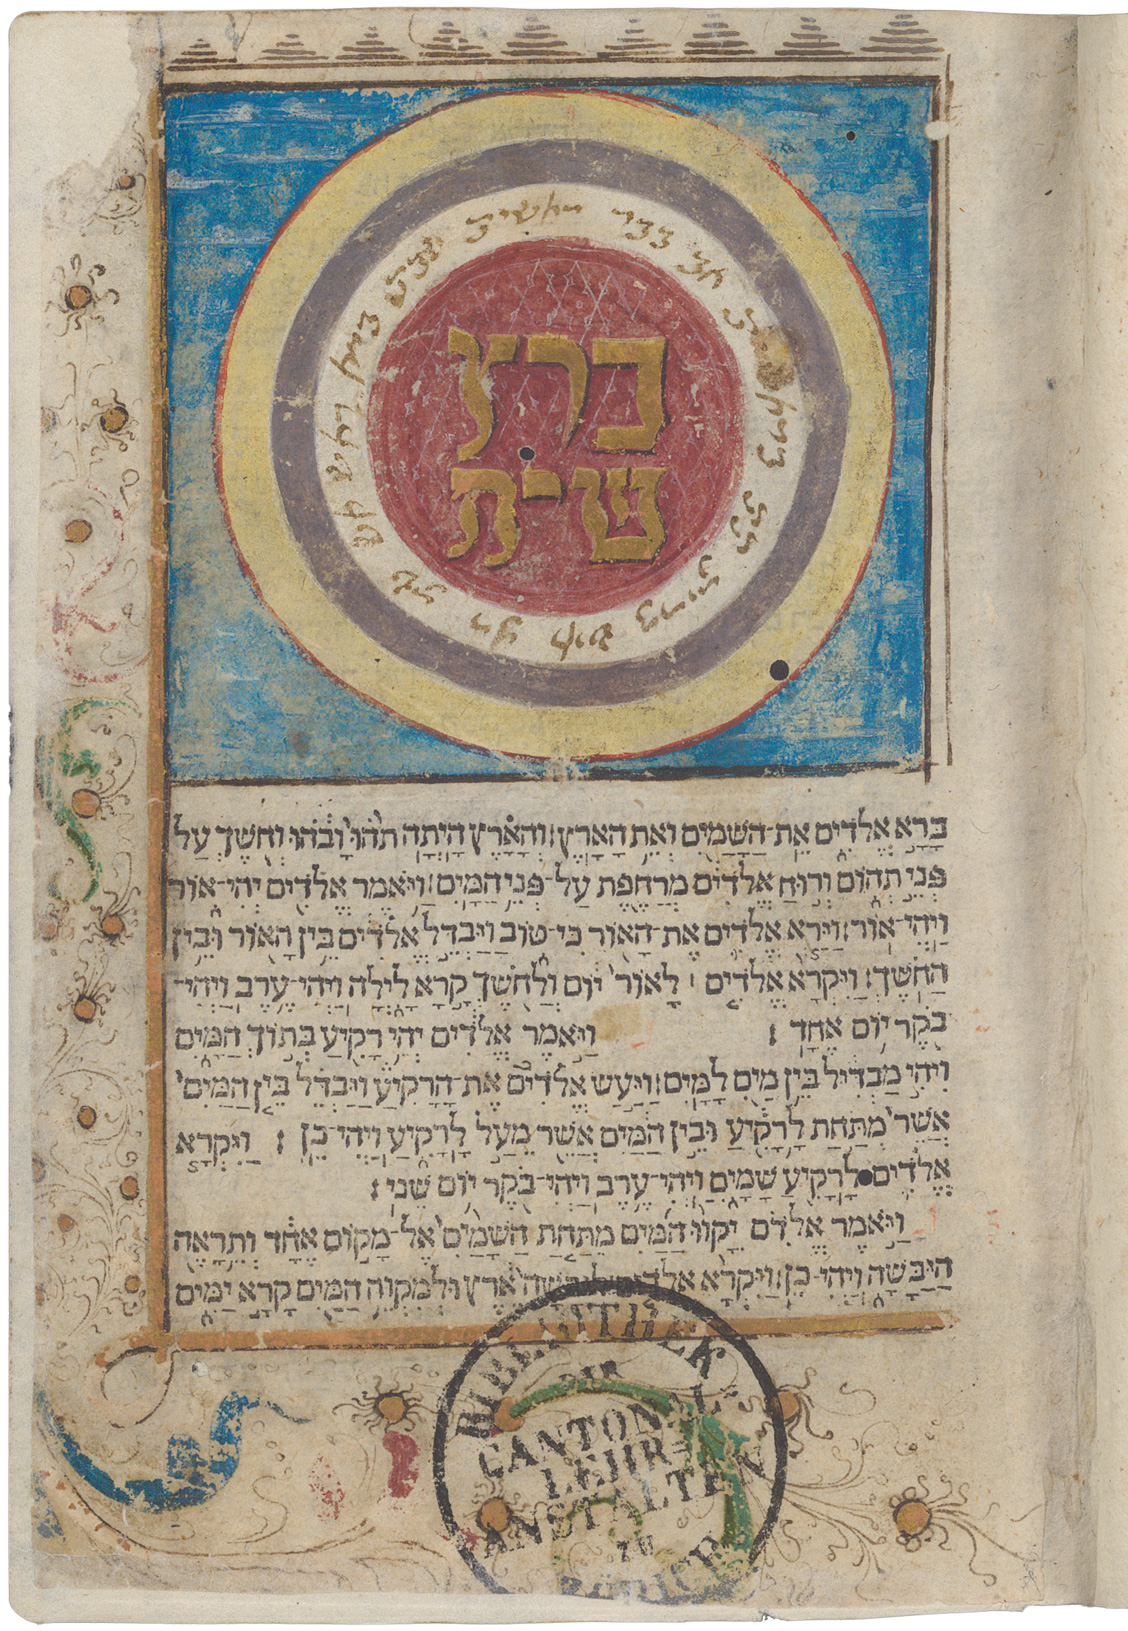 Beginn der Genesis, hebräische Bibel, Brescia 1494. (Signatur: ZBZ, Ink K 359)